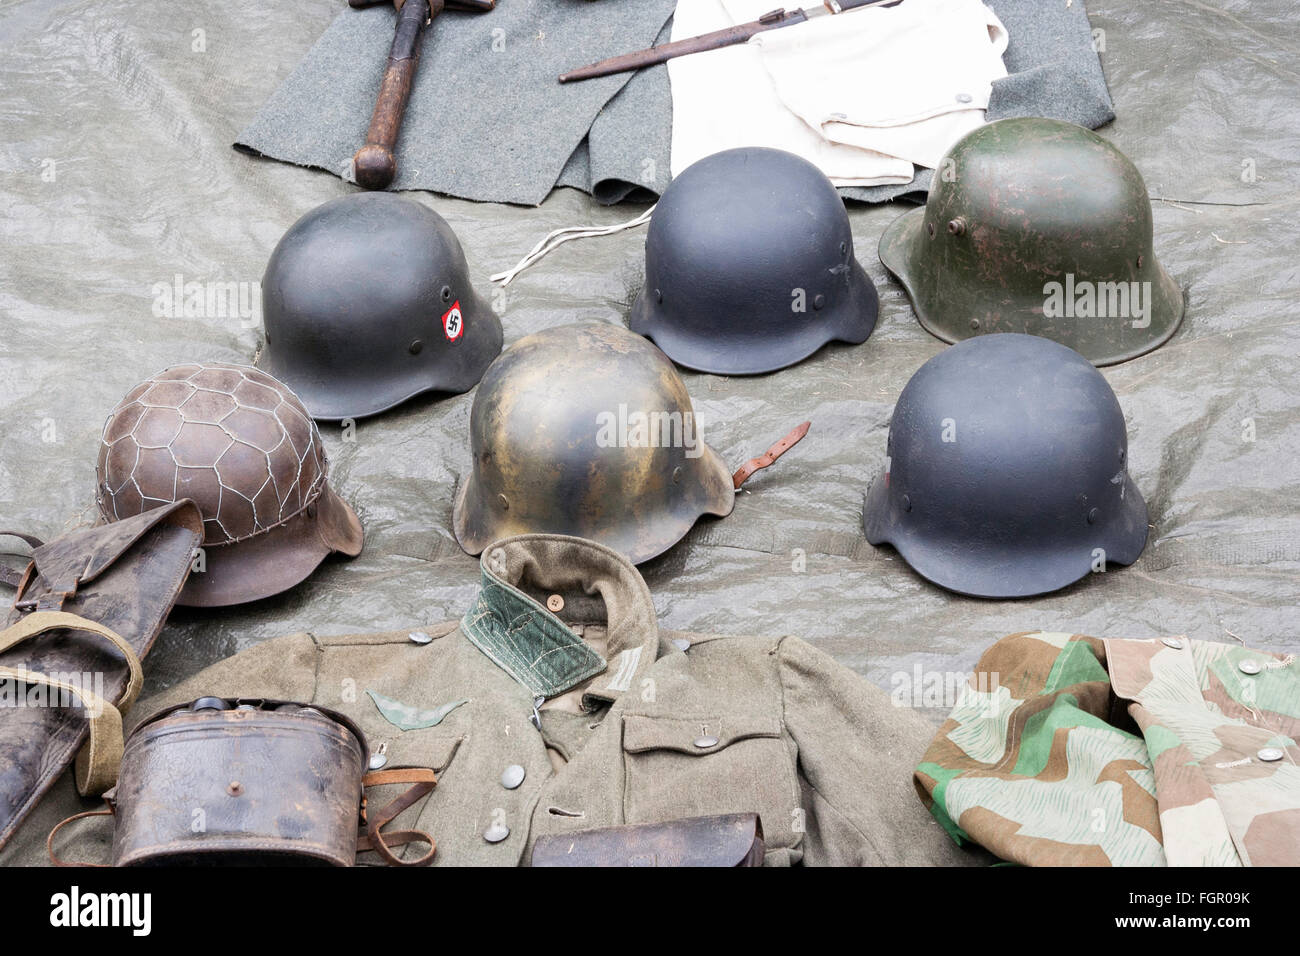 Second world war re-enactment. Six types of WW2 German stahlhelm, tin helmets, arranged on ground sheet. Stock Photo